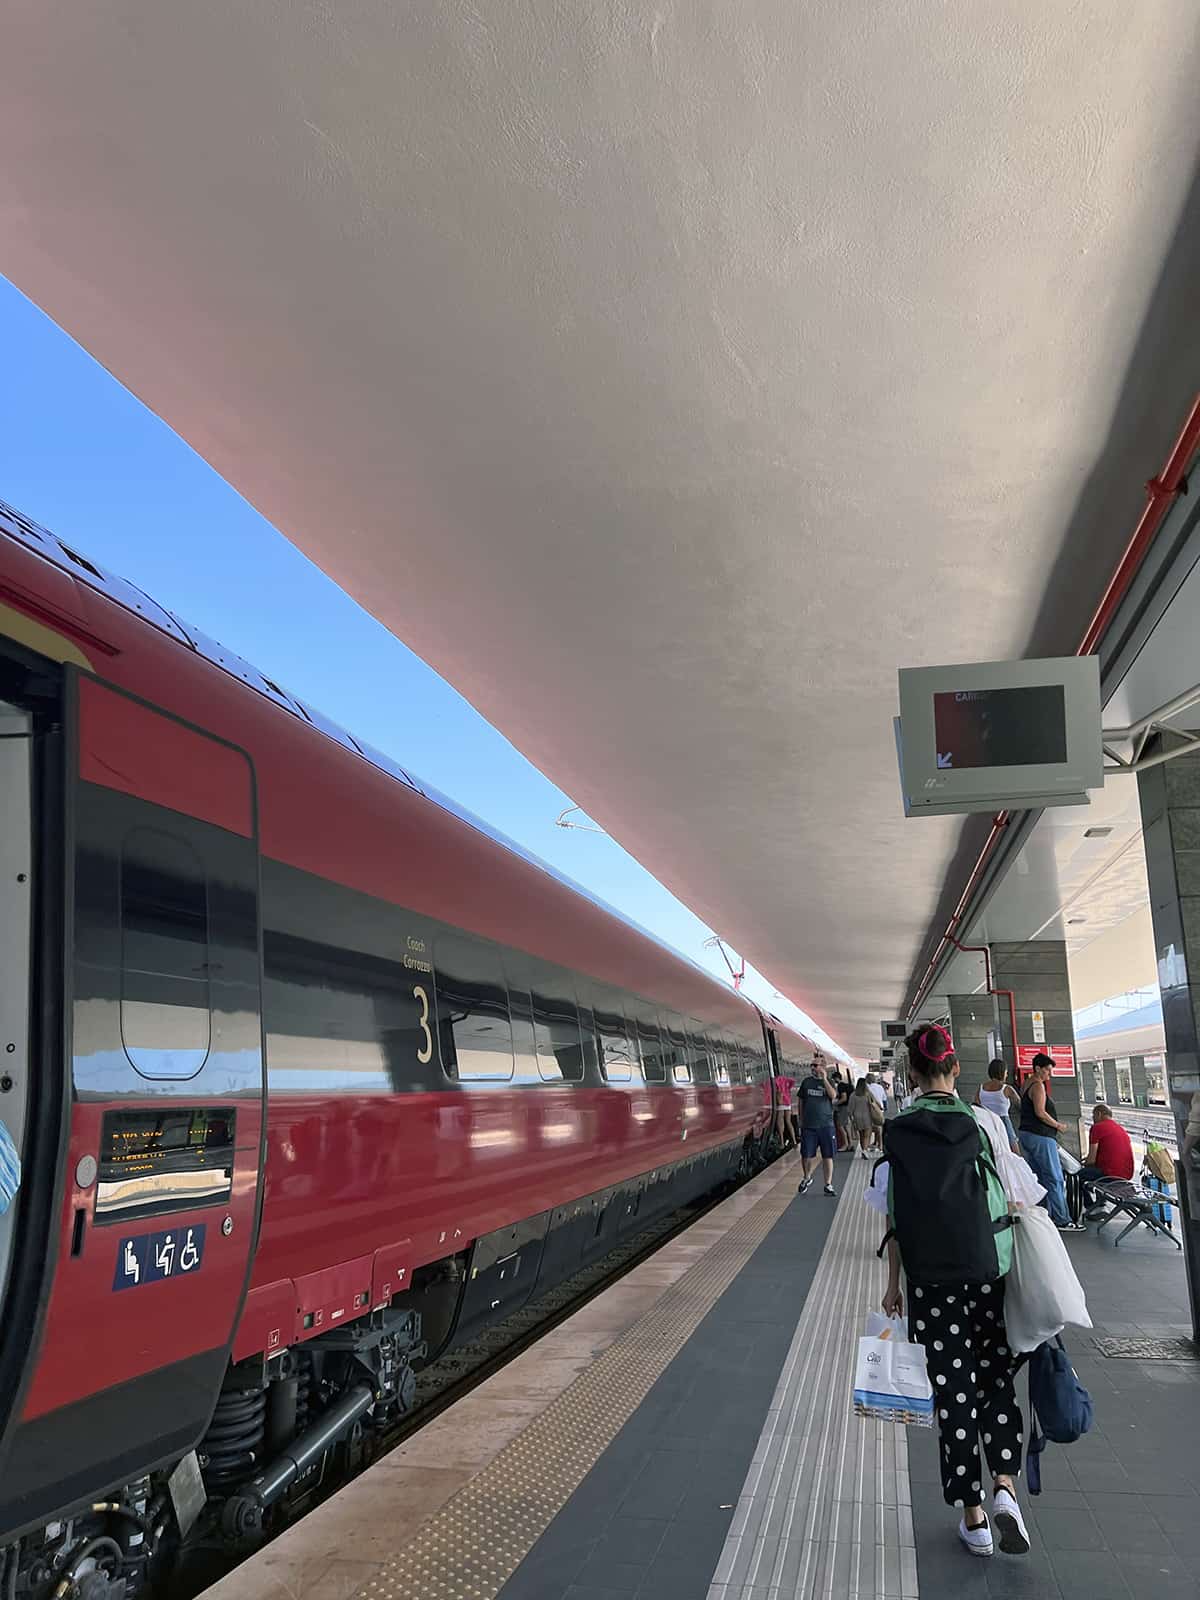 Naples italy red Italo train at the platform